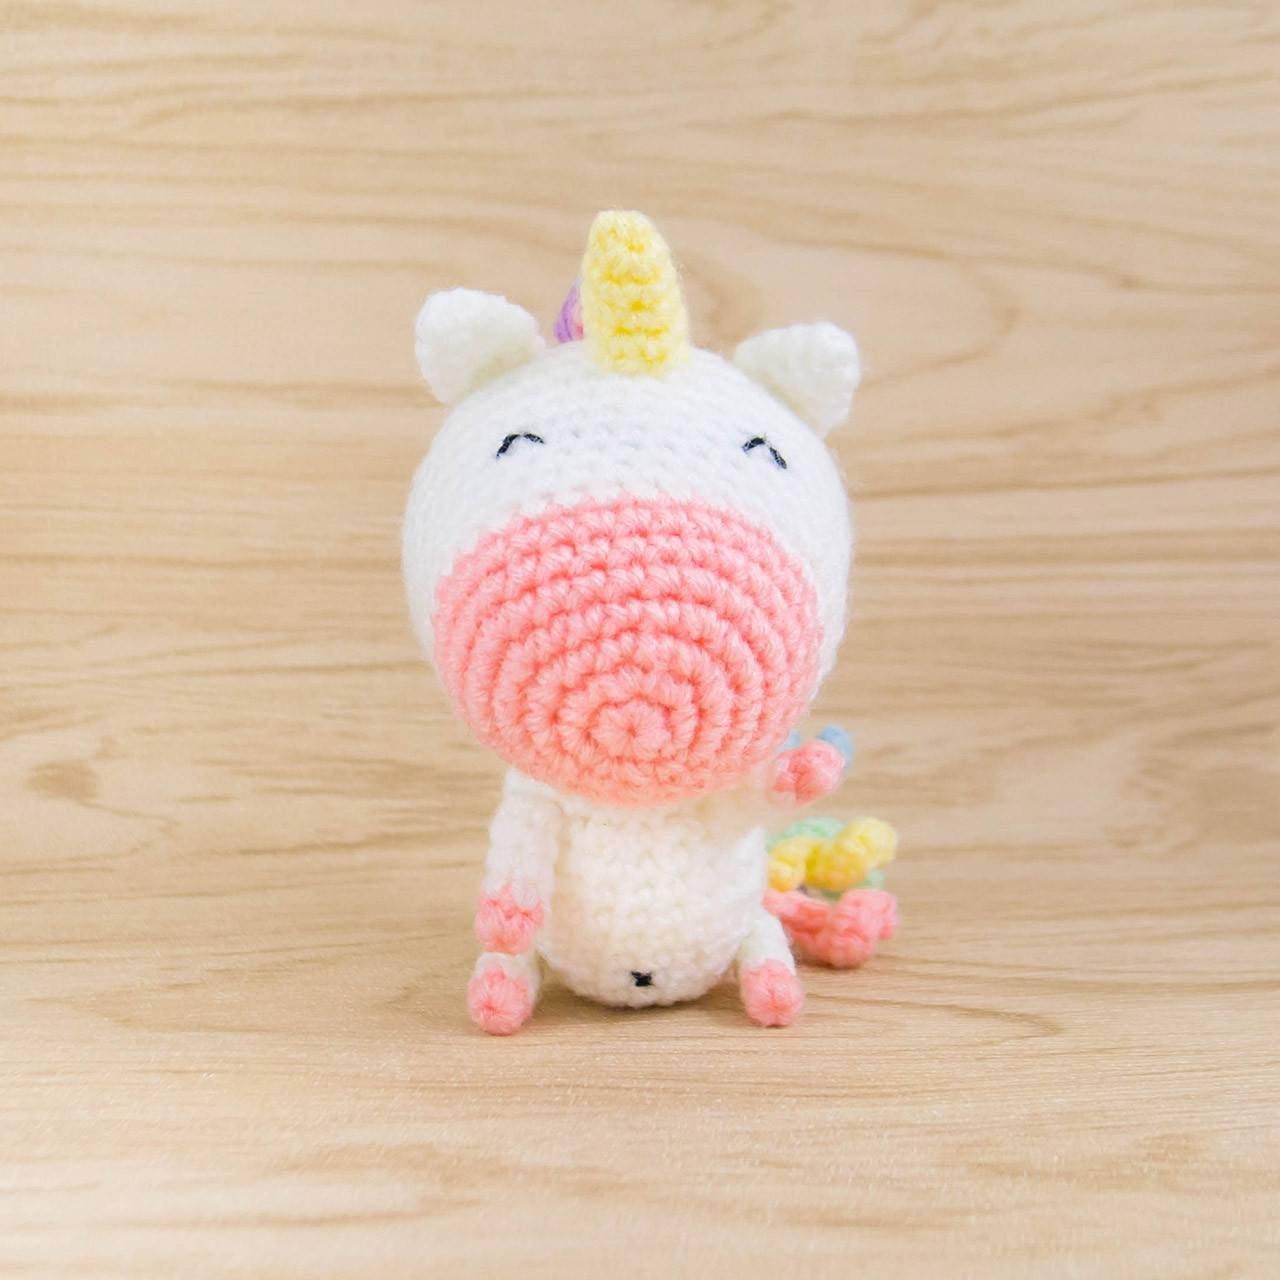 Crochet unicorn plush